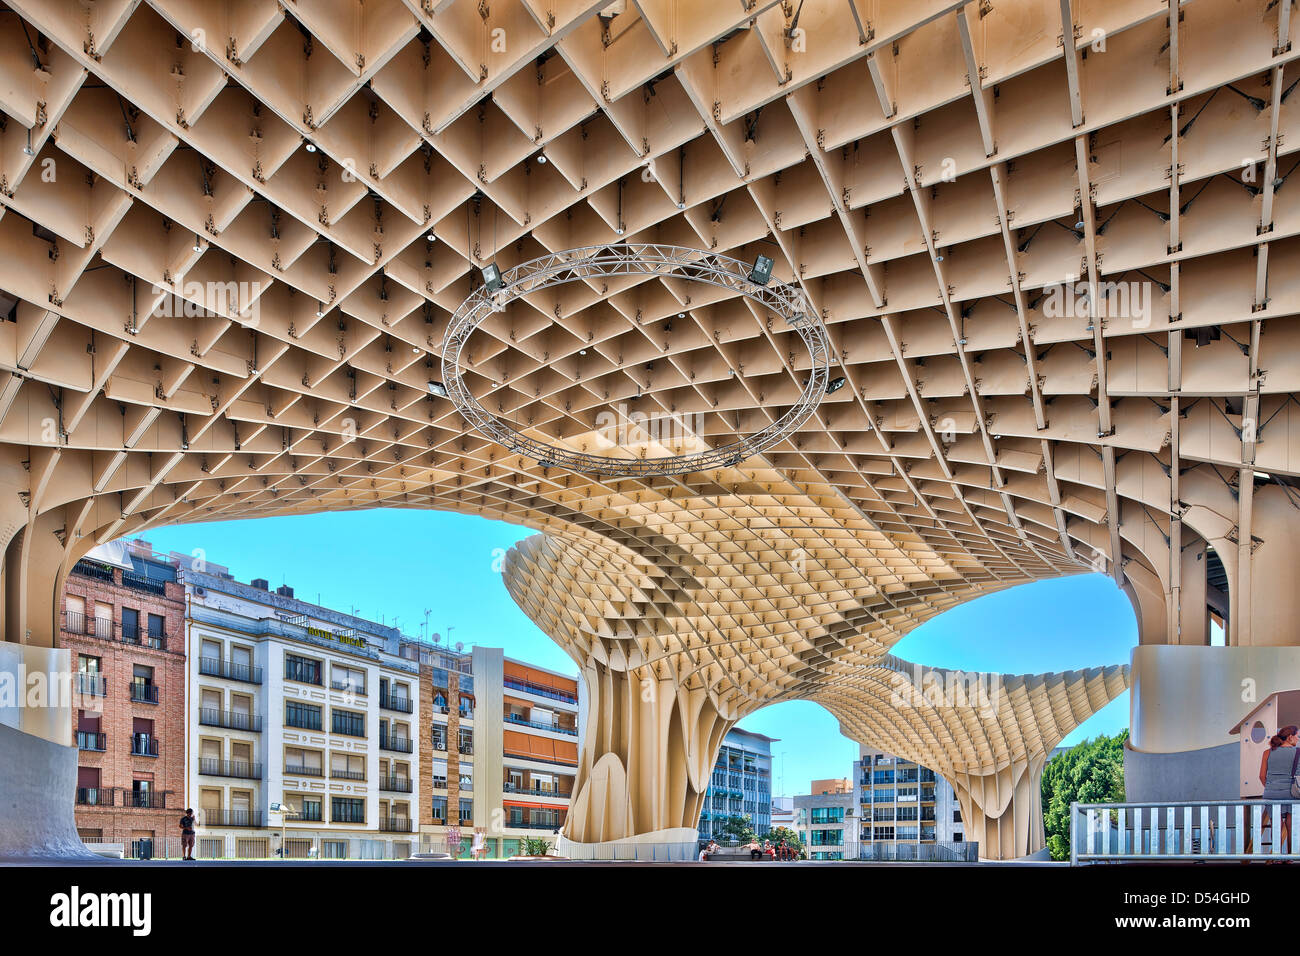 Seville, Spain, the Metropol Parasol in the Plaza de la Encarnacion Stock Photo